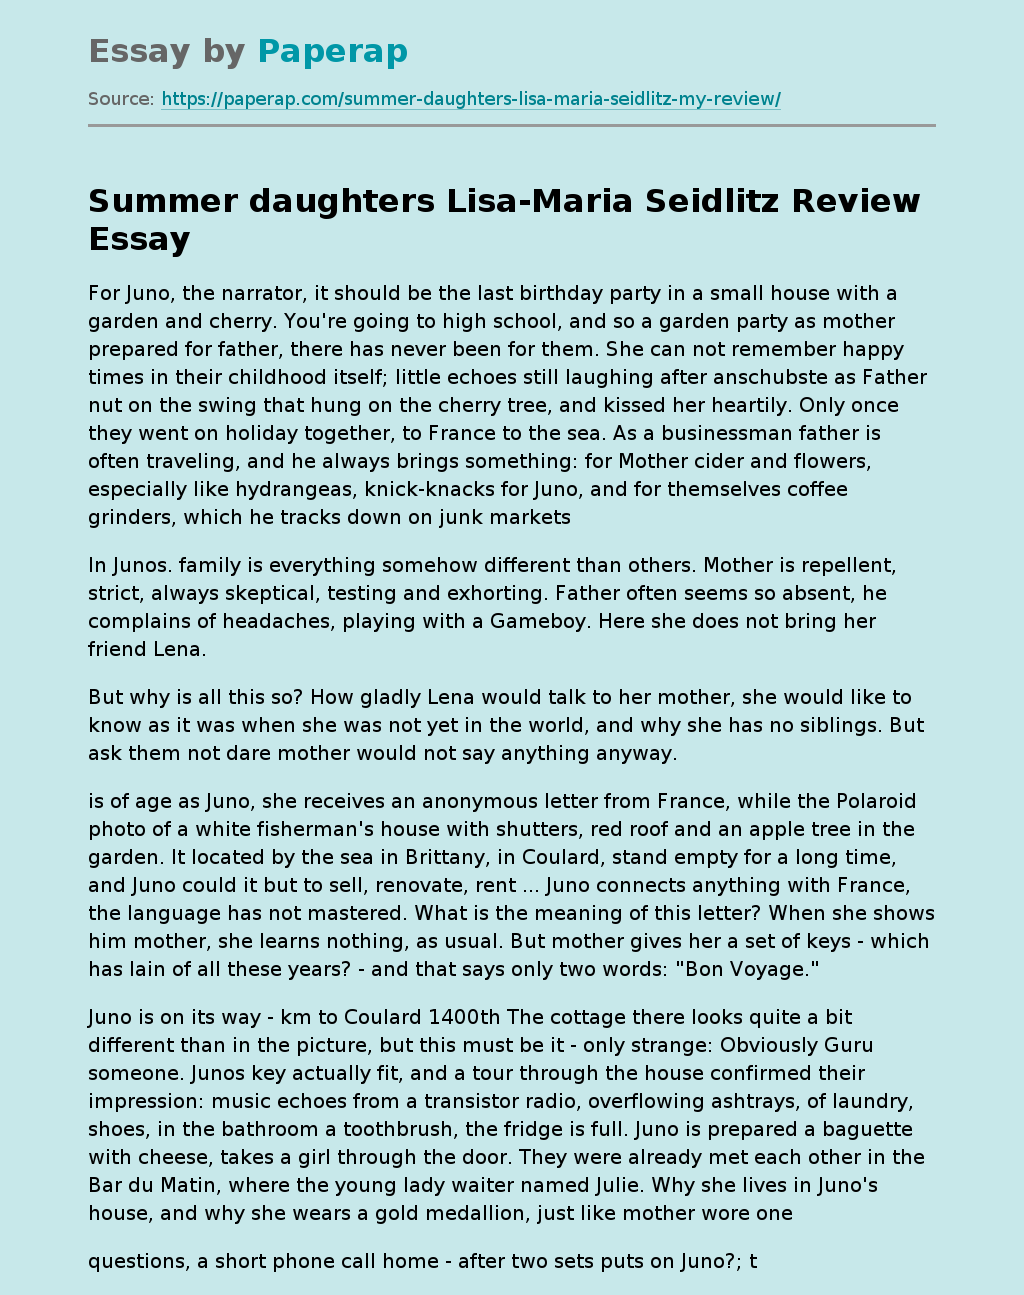 Summer Daughters Lisa-Maria Seidlitz Review